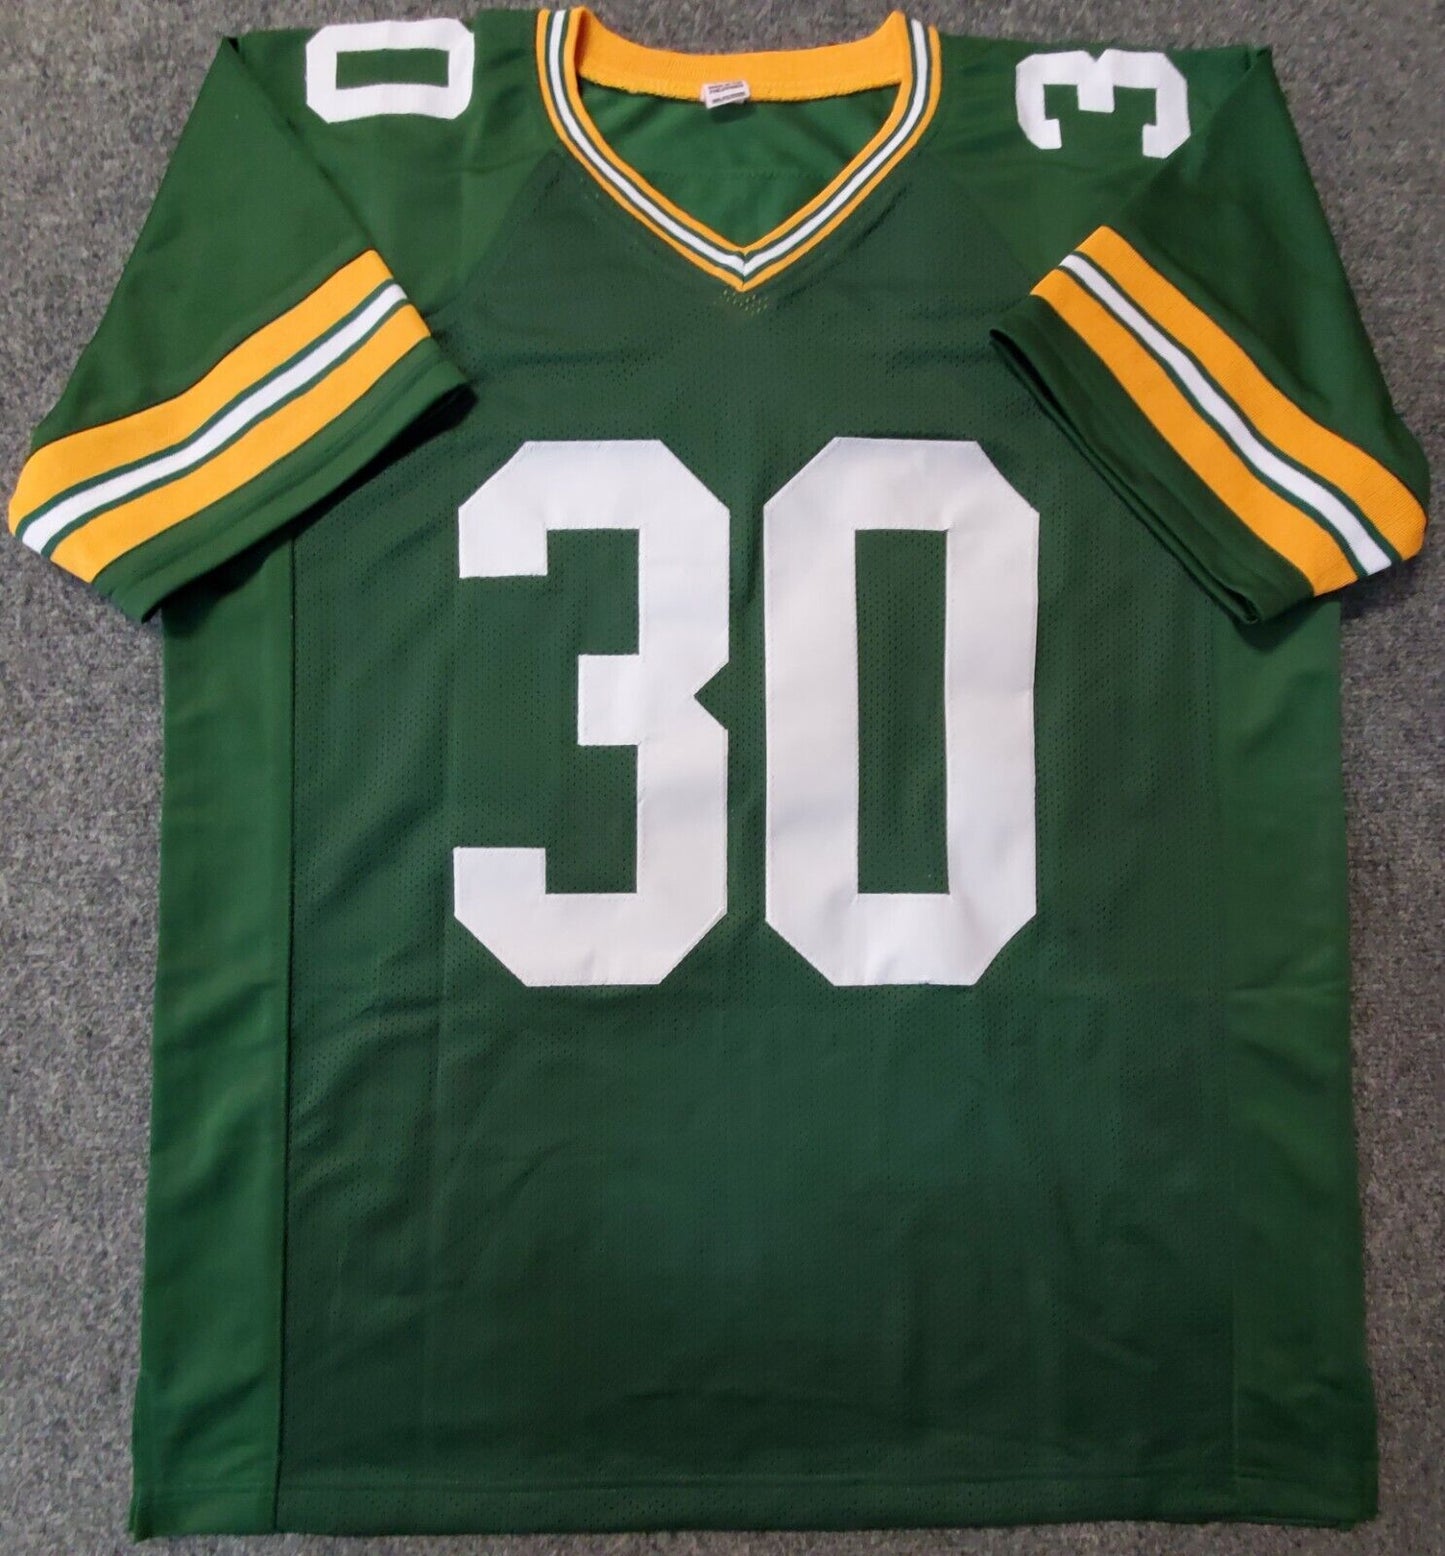 MVP Authentics Green Bay Packers John Kuhn Autographed Signed Jersey Beckett Coa 107.10 sports jersey framing , jersey framing